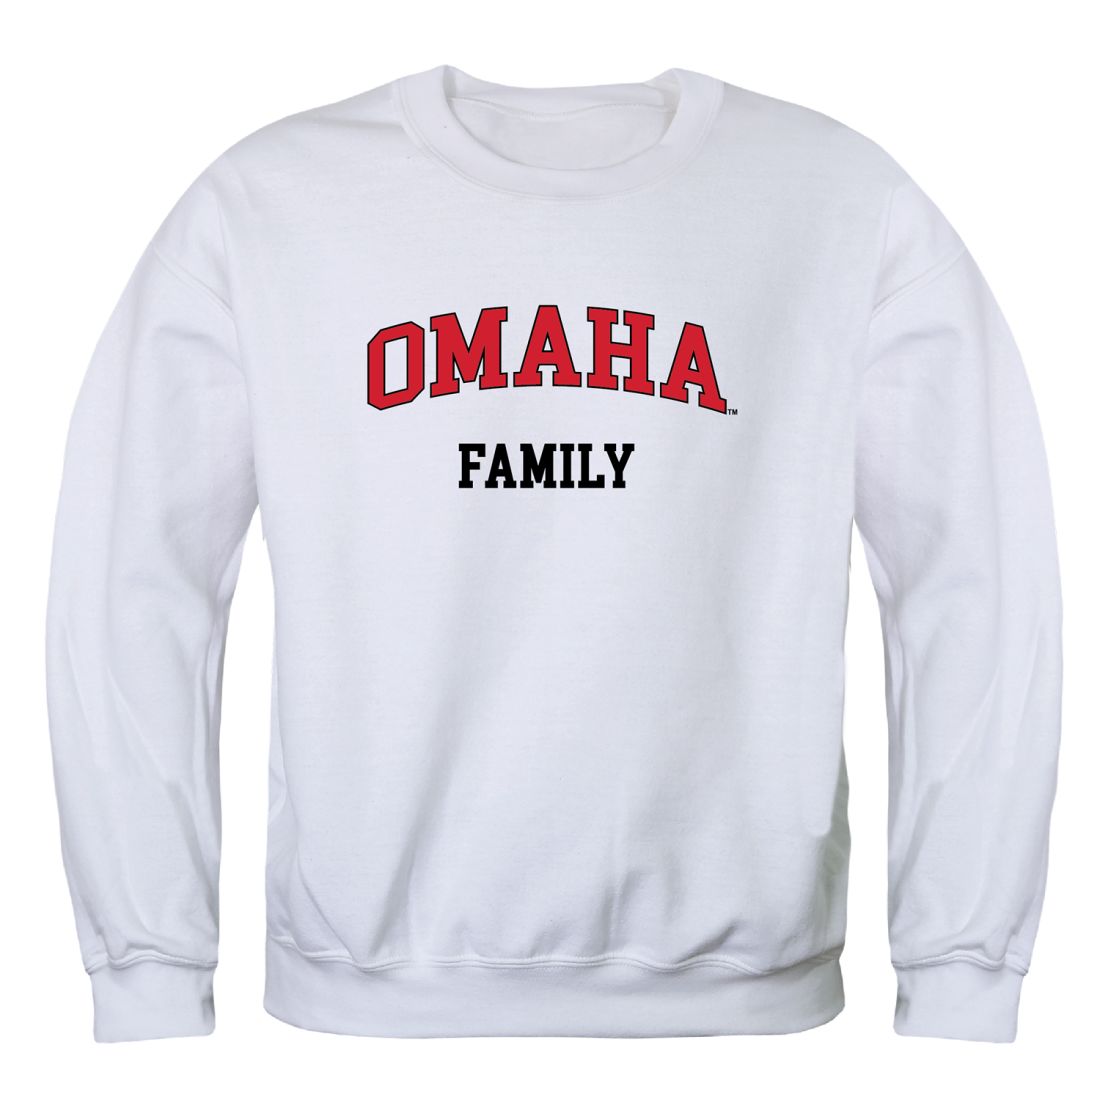 University-of-Nebraska-Omaha-Mavericks-Family-Fleece-Crewneck-Pullover-Sweatshirt